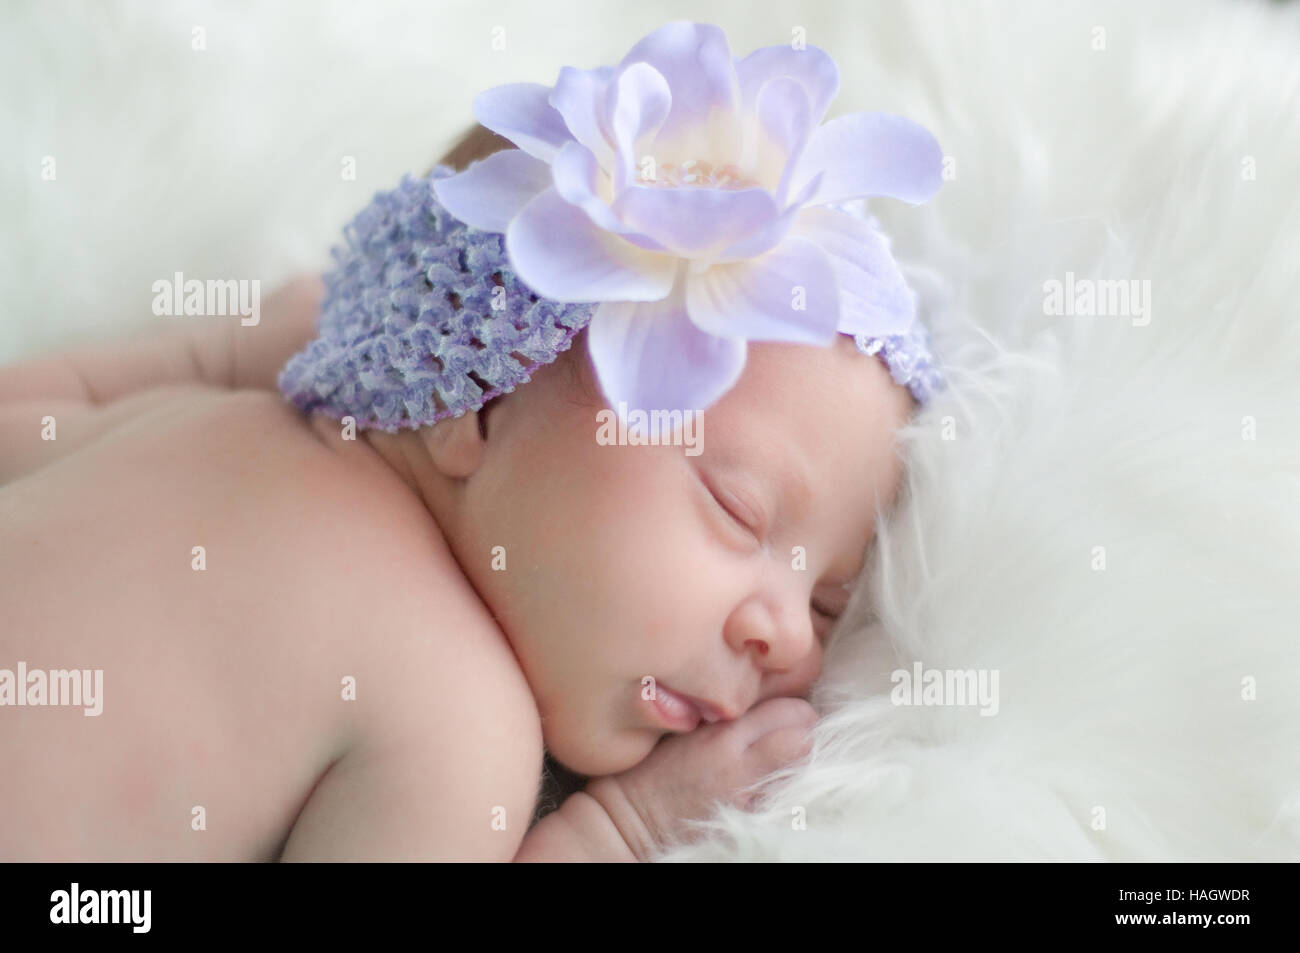 Precious baby girl sleeping in purple headband sleeping on white fur blanket. Stock Photo